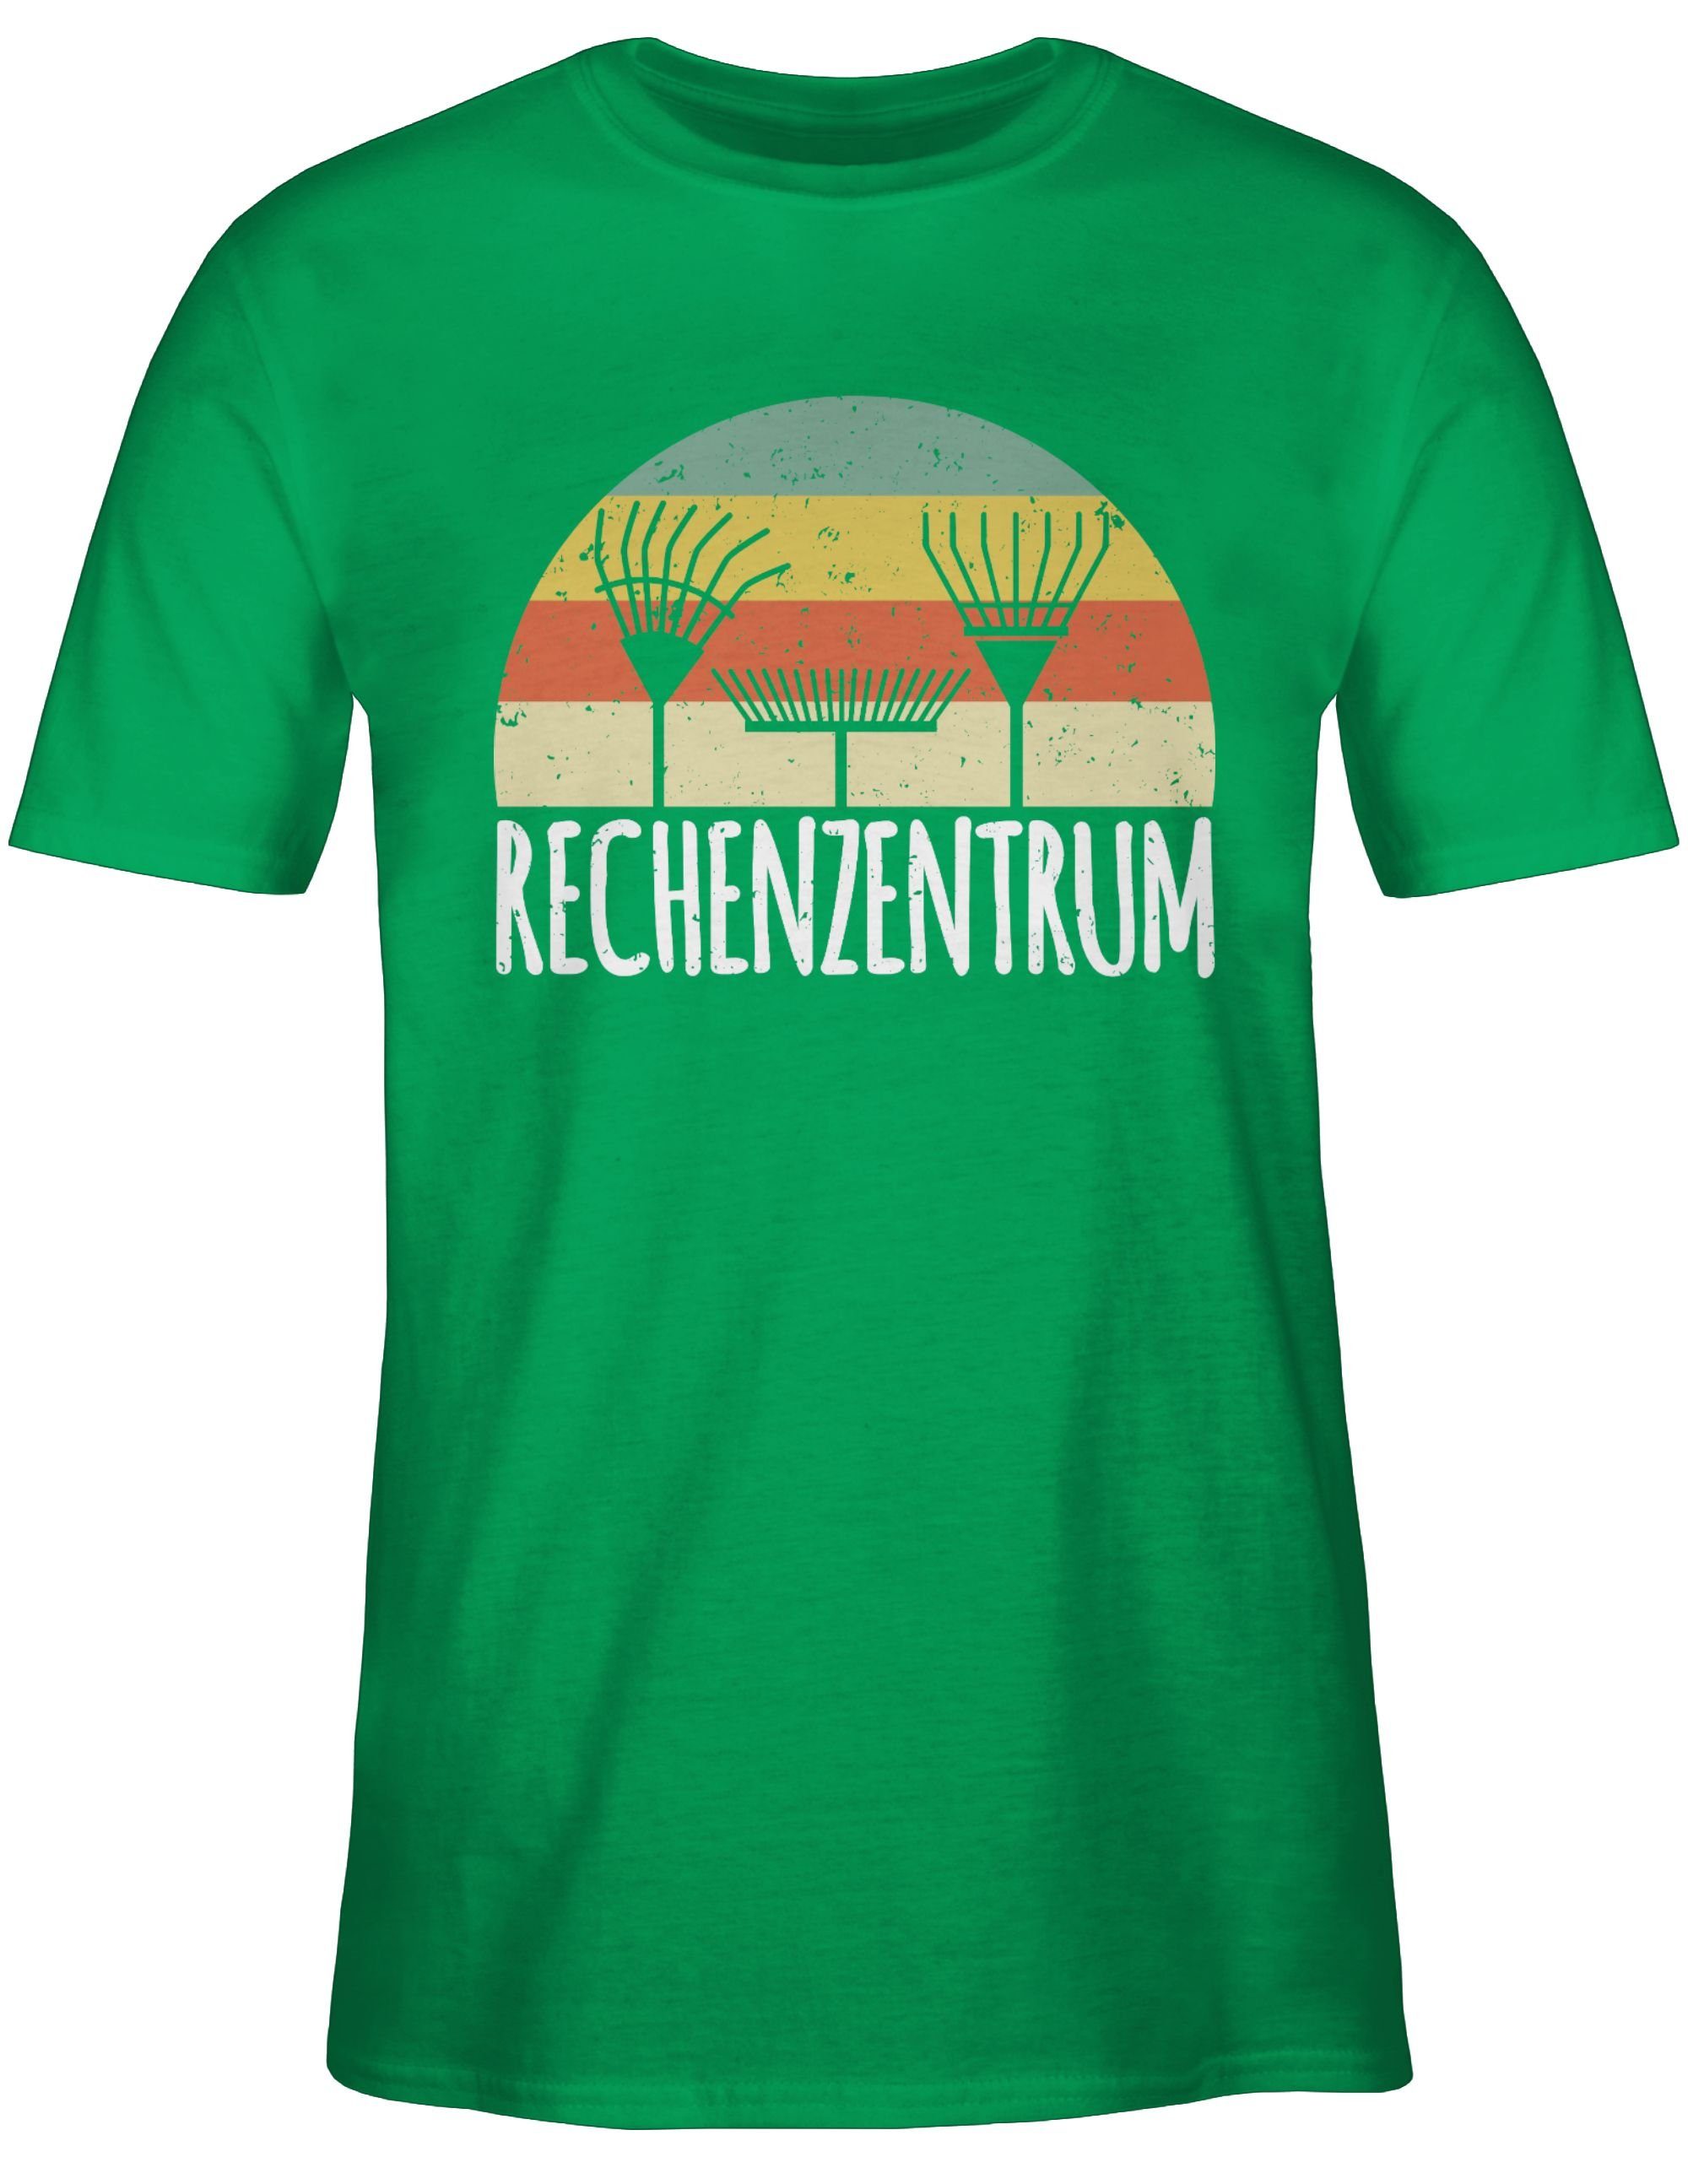 Shirtracer t-shirt - Herren weiß Rechenzentrum Grün garten - Outfit tshirt rechenzentrum gärtner T-Shirt Premium - Hobby - shirt T-Shirt - 03